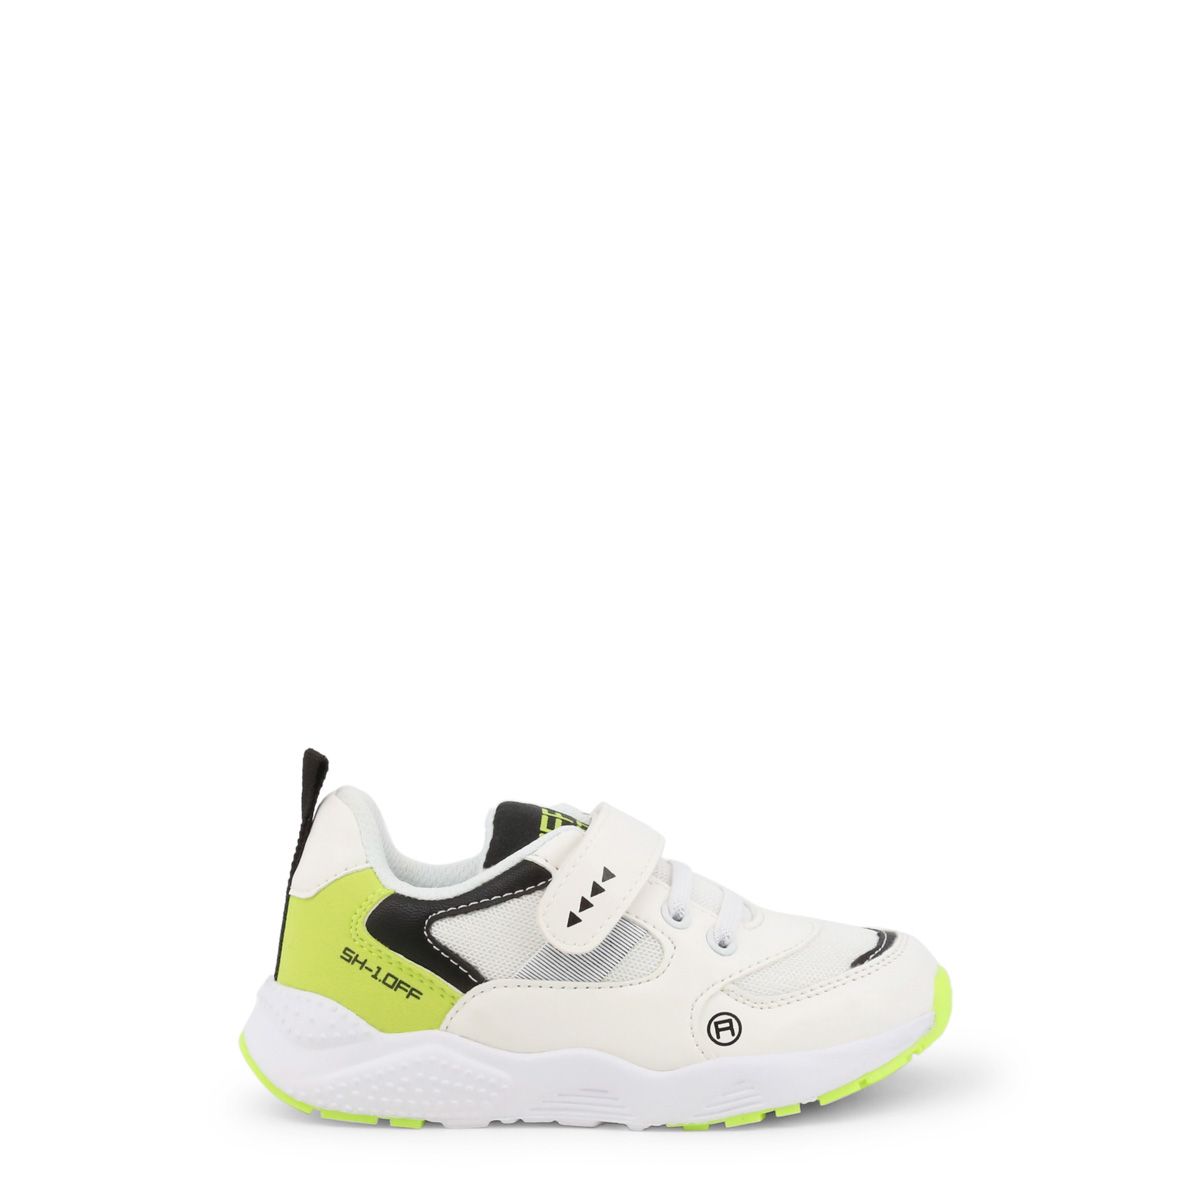 Schuhe & Sneakers & Kinder & Shone & 10260-021_White-Yellow & Weiß